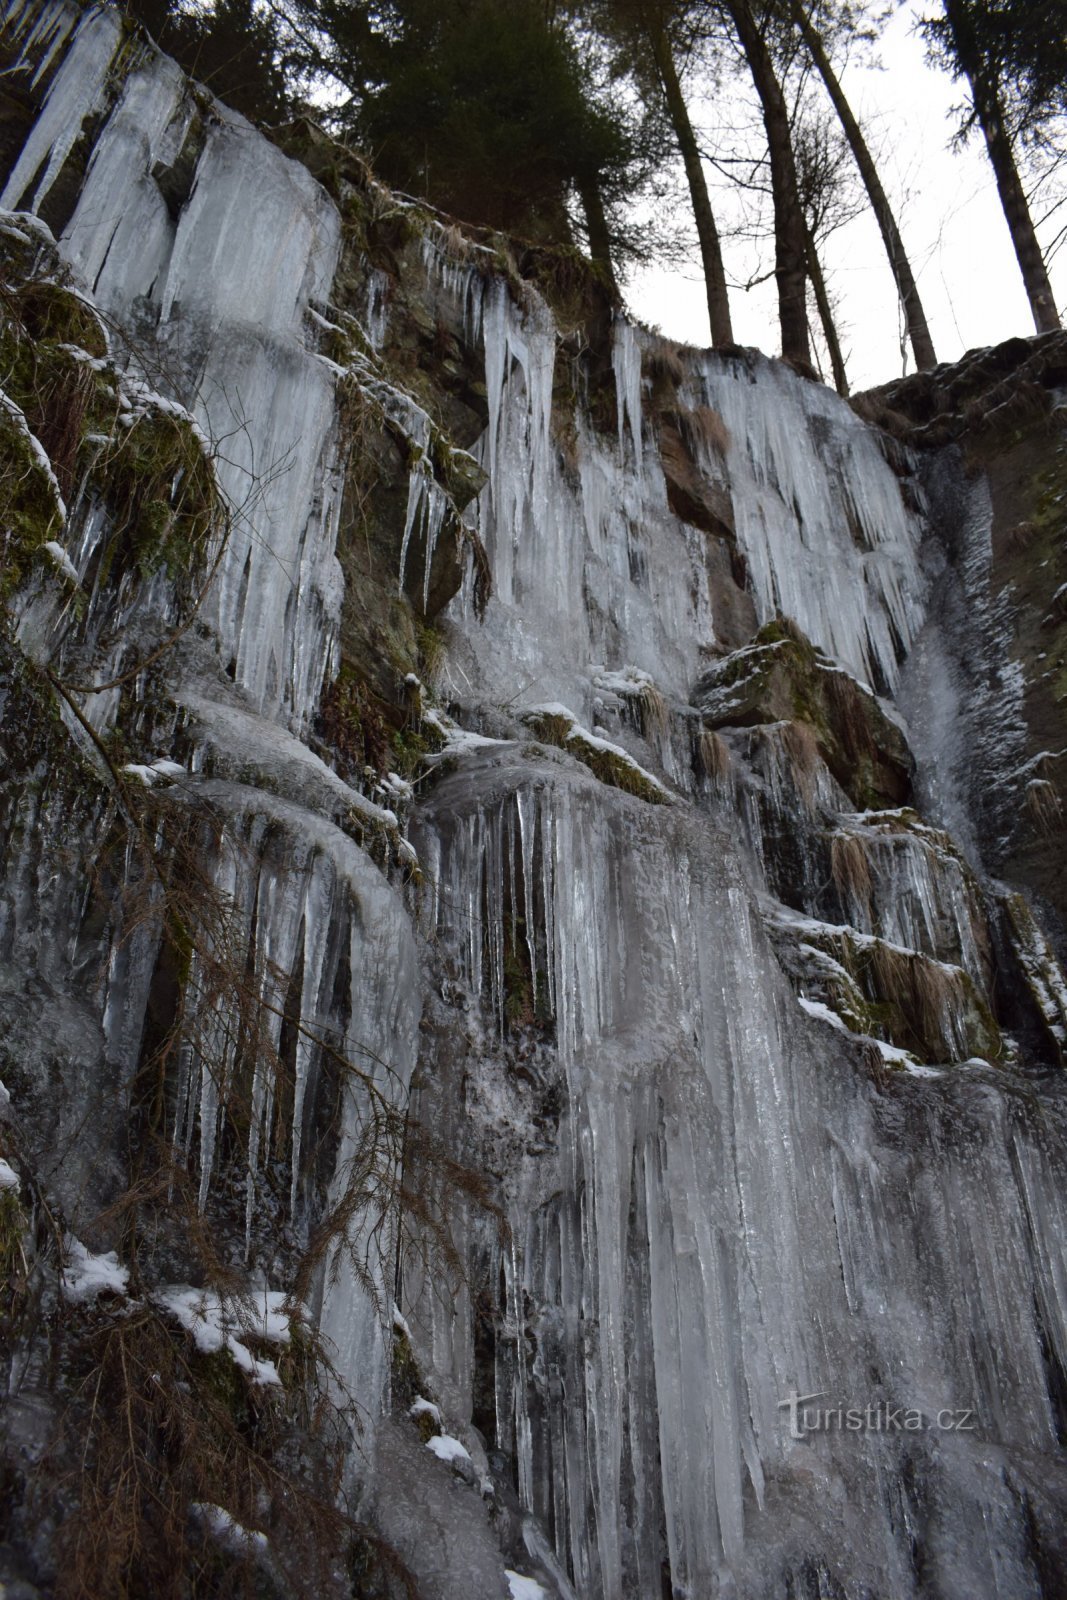 Icefall near Želiva.